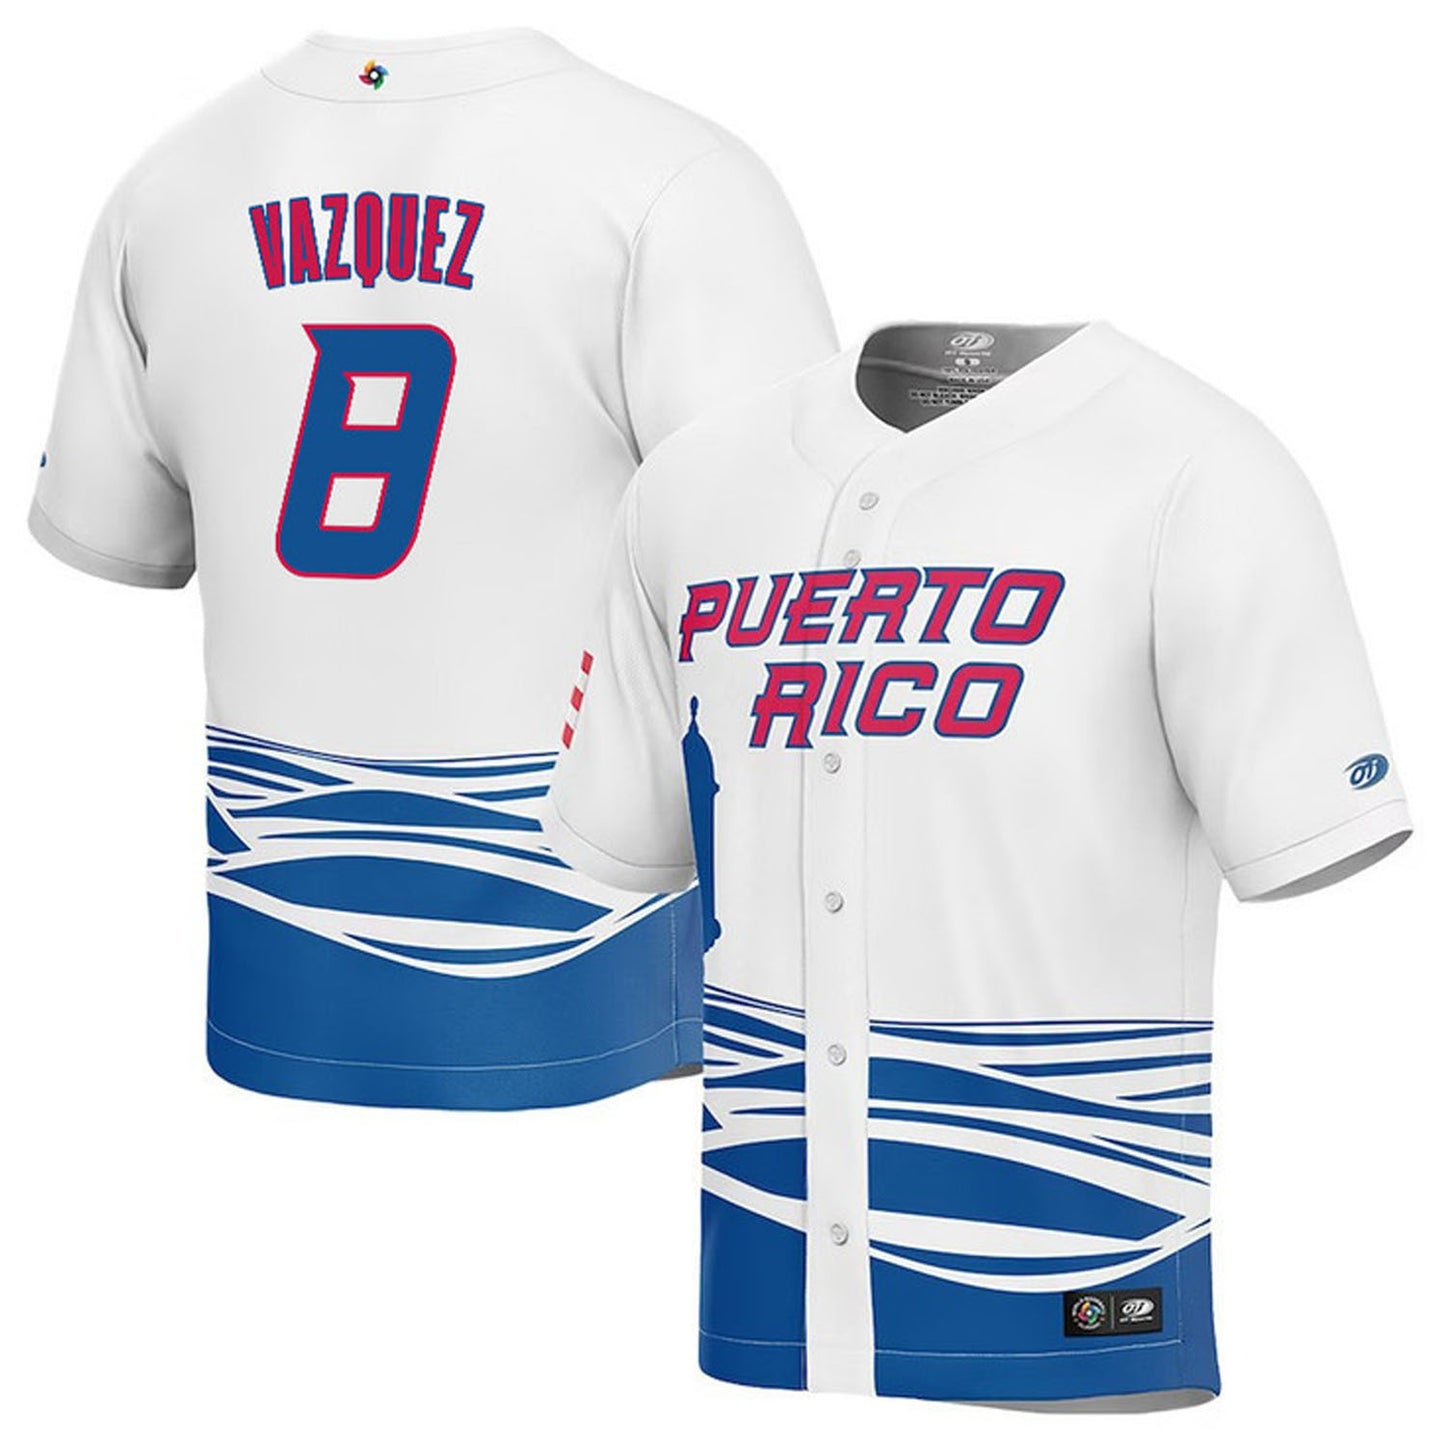 WBC Christian Vazquez Puerto Rico 8 Jersey